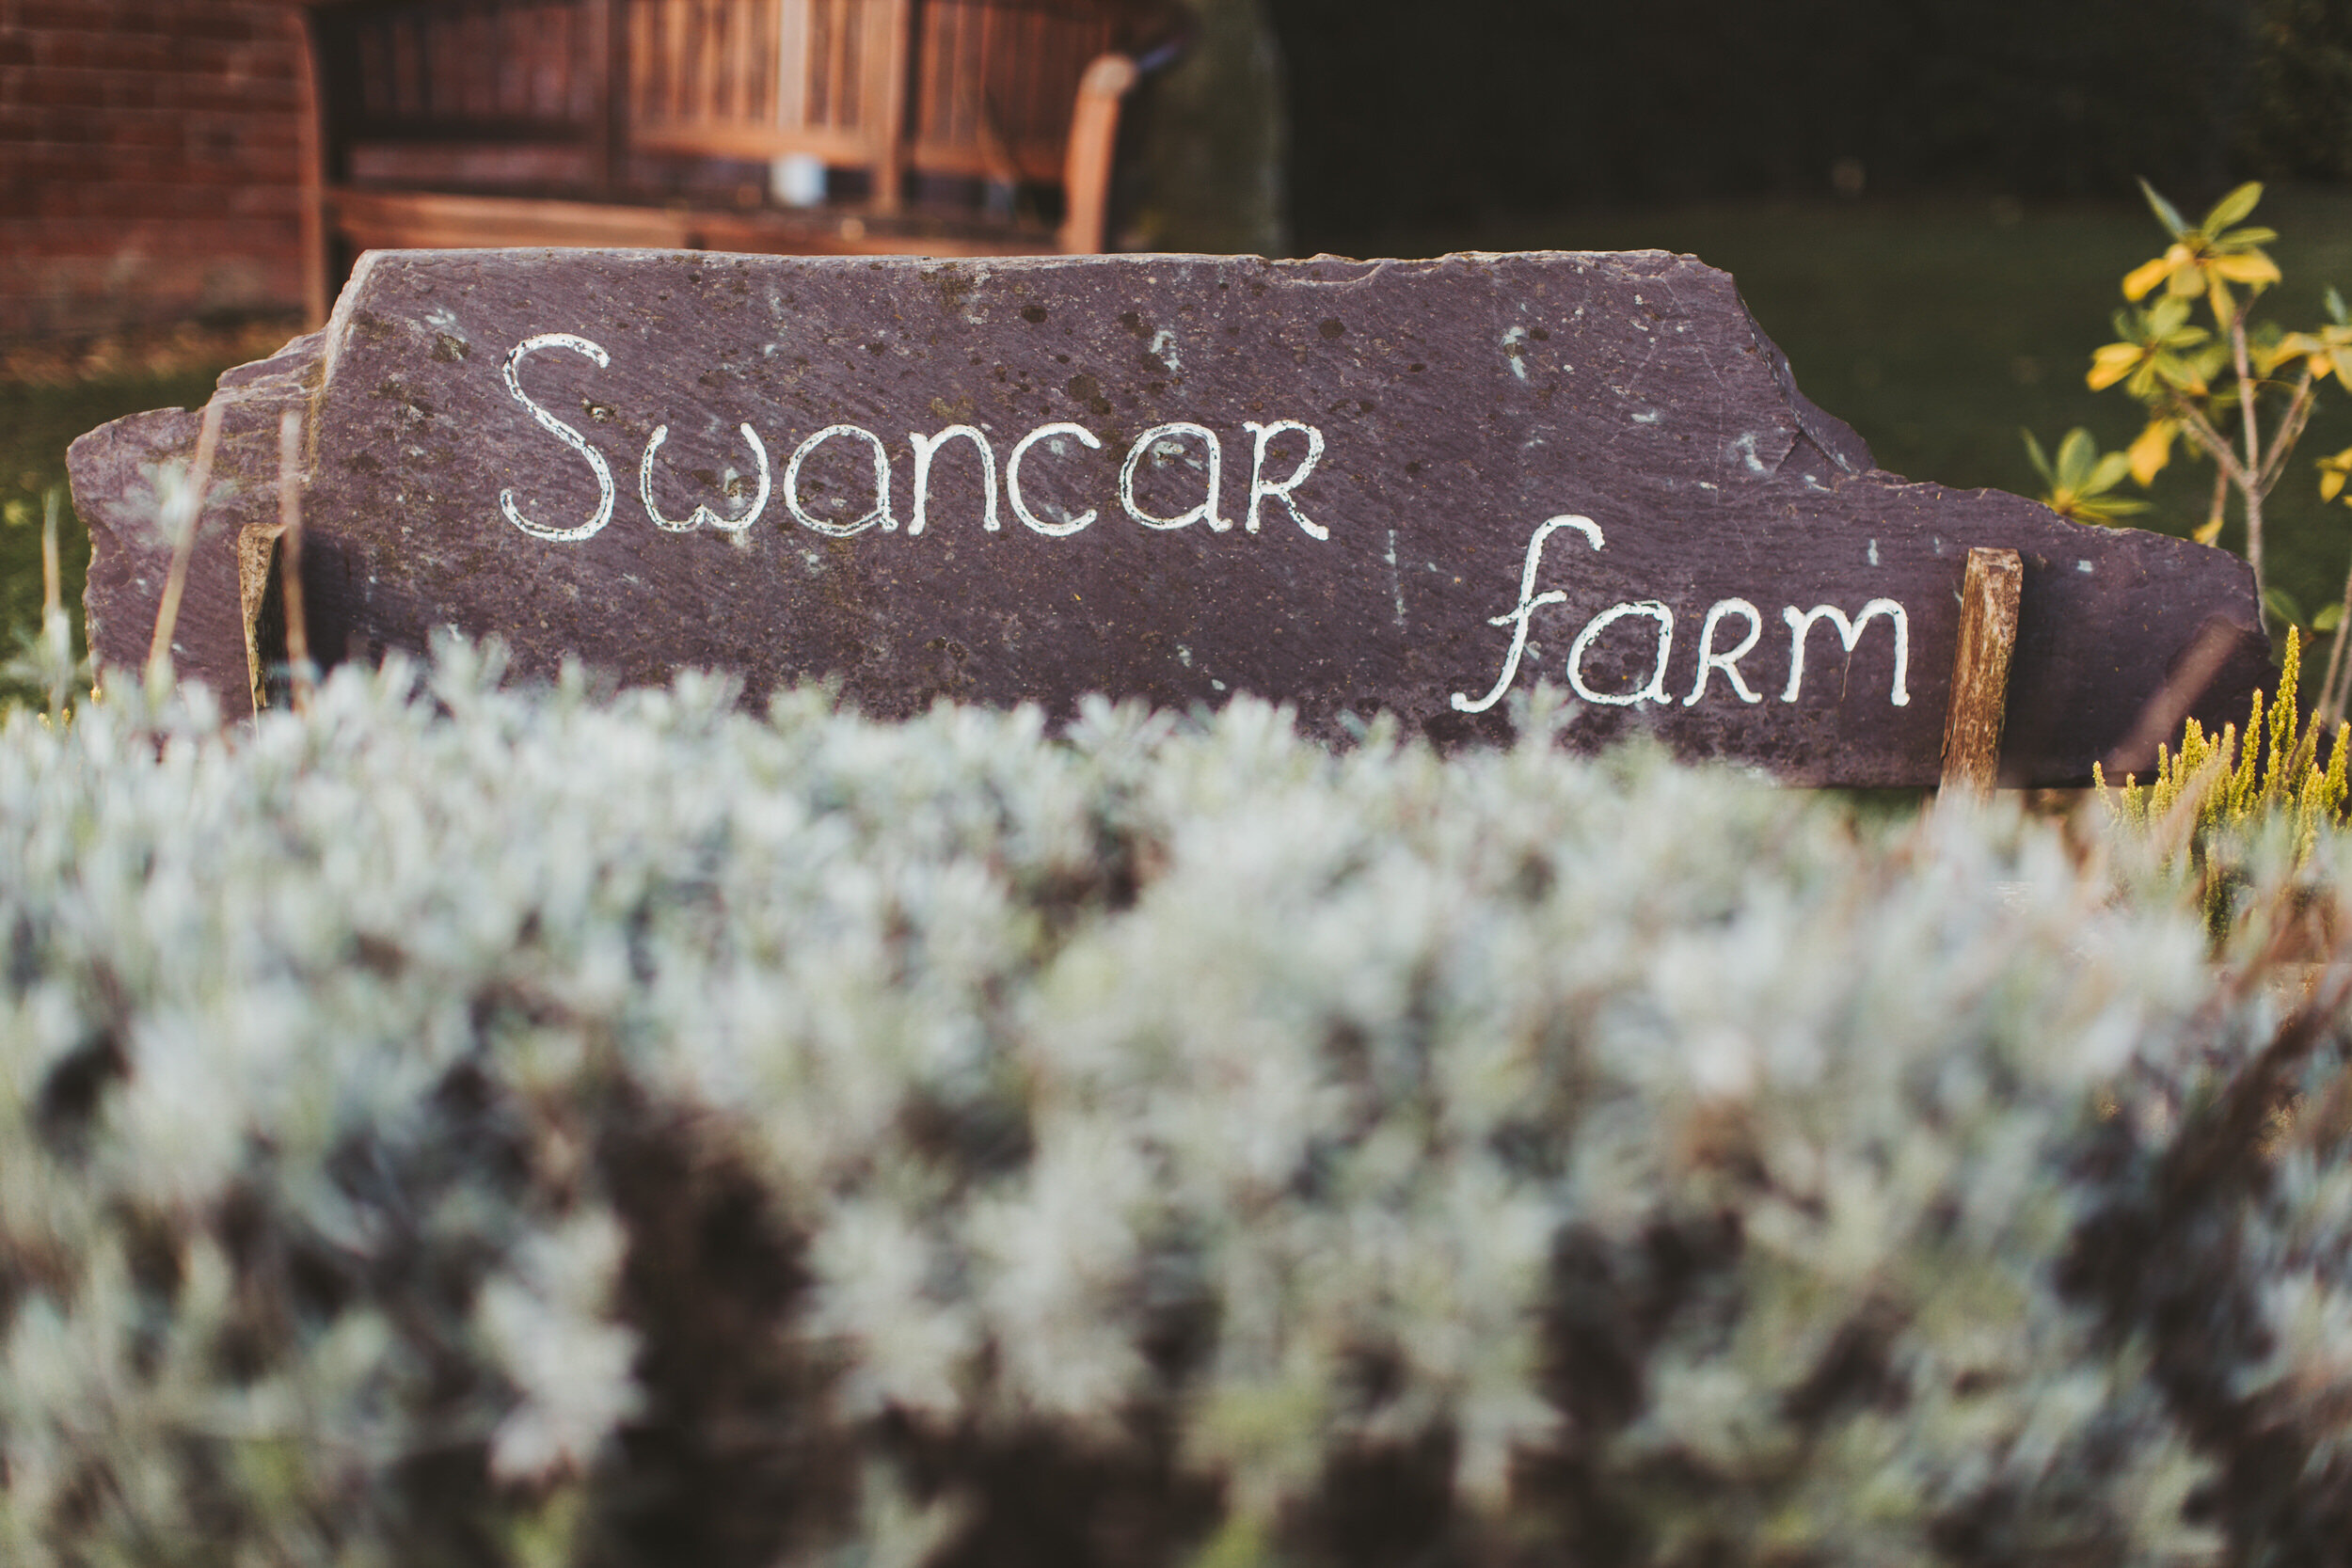 Photogenick Photography swancar farm wedding blog2.jpg